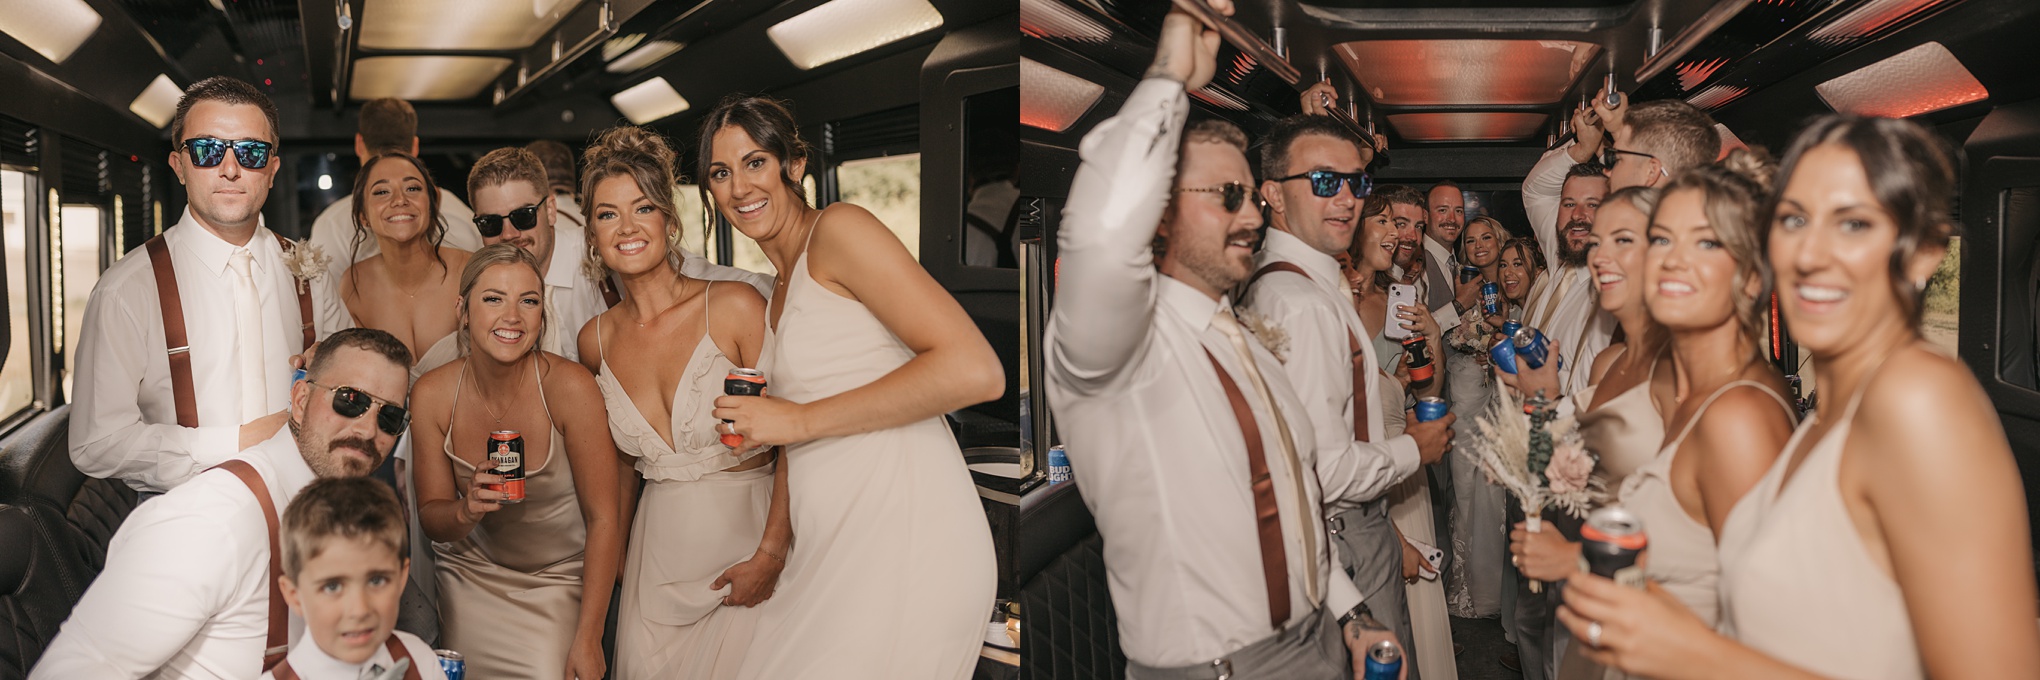 party bus wedding photo